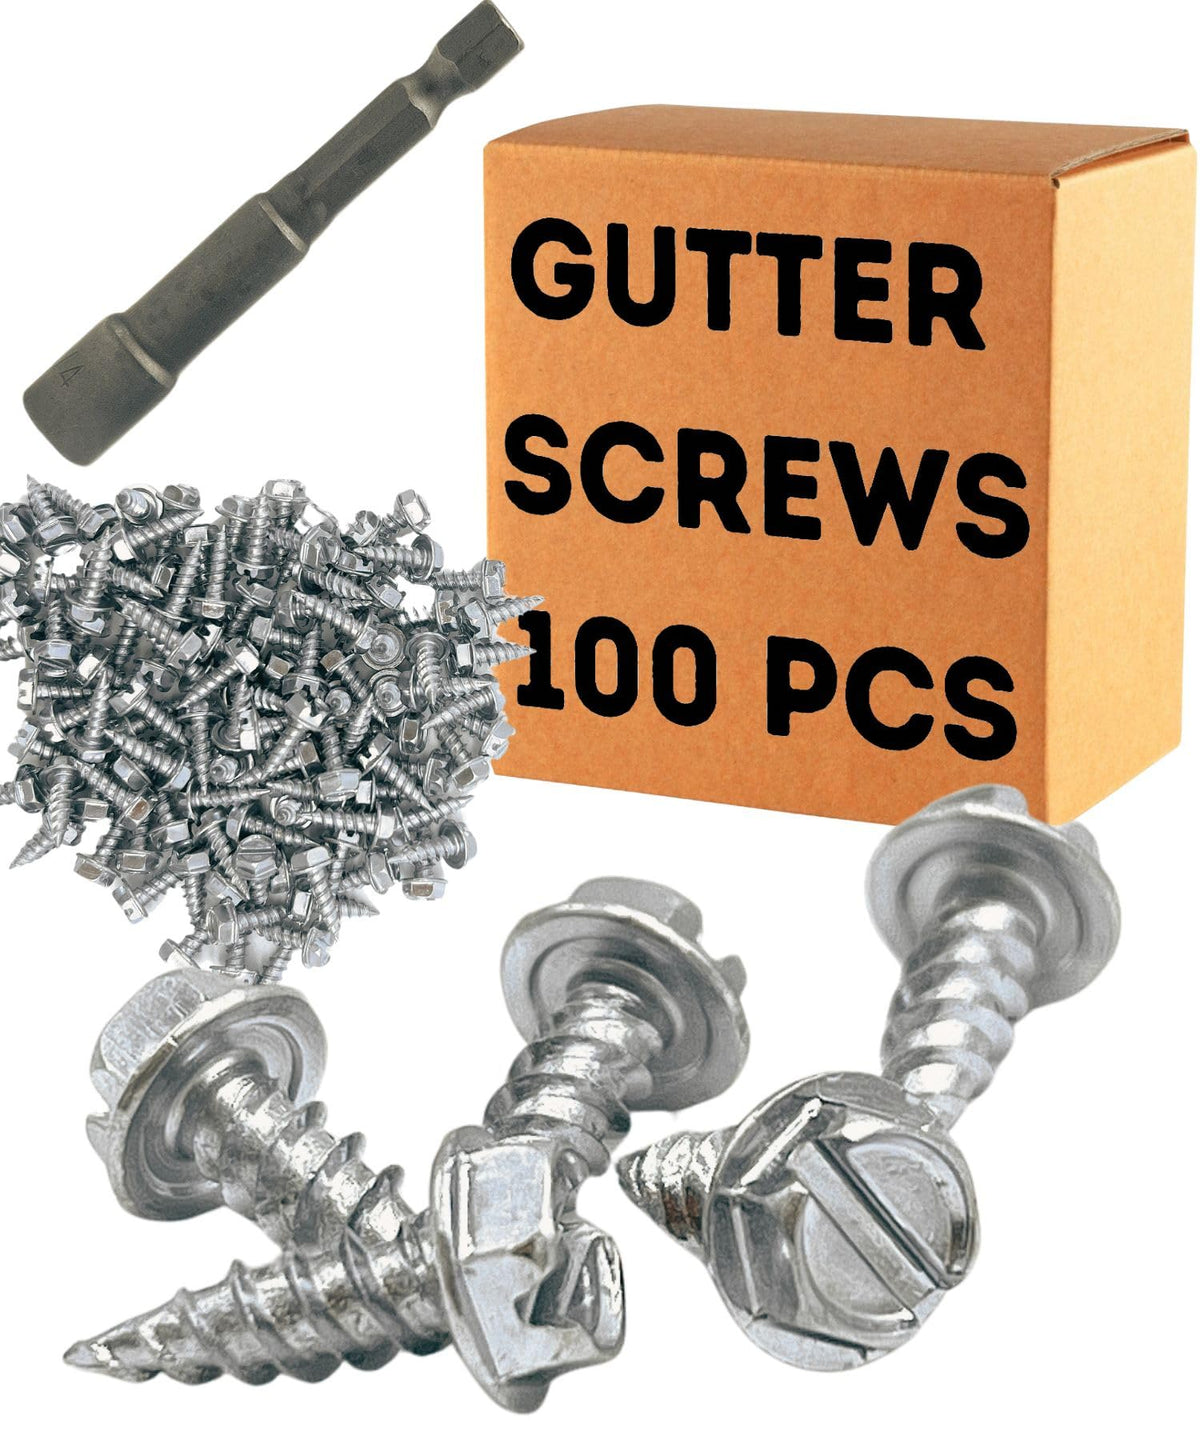 Gutter Screws Stainless Steel - 1/2" #8 Zip Screws - for Gutter Guard Downspout Rain Gutter - Self-Piercing Easy Start Metal Screws - Free 1/4" Magnetic Hex Driver Nut Setter